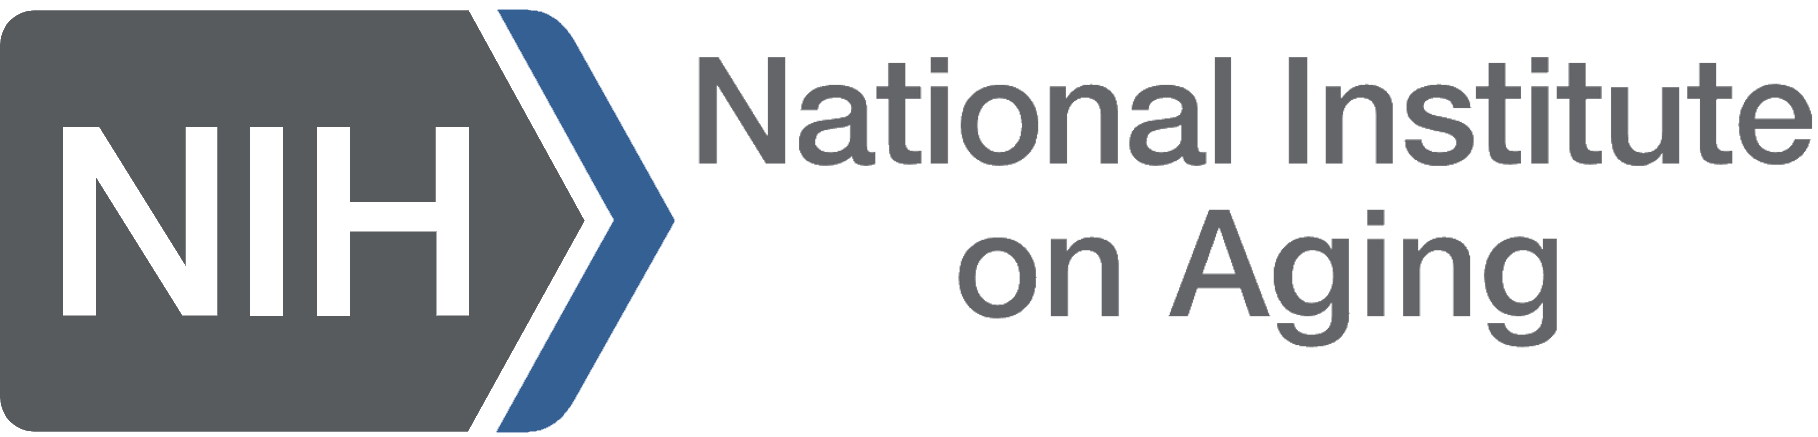 National Institute of Health: Institute on Aging logo